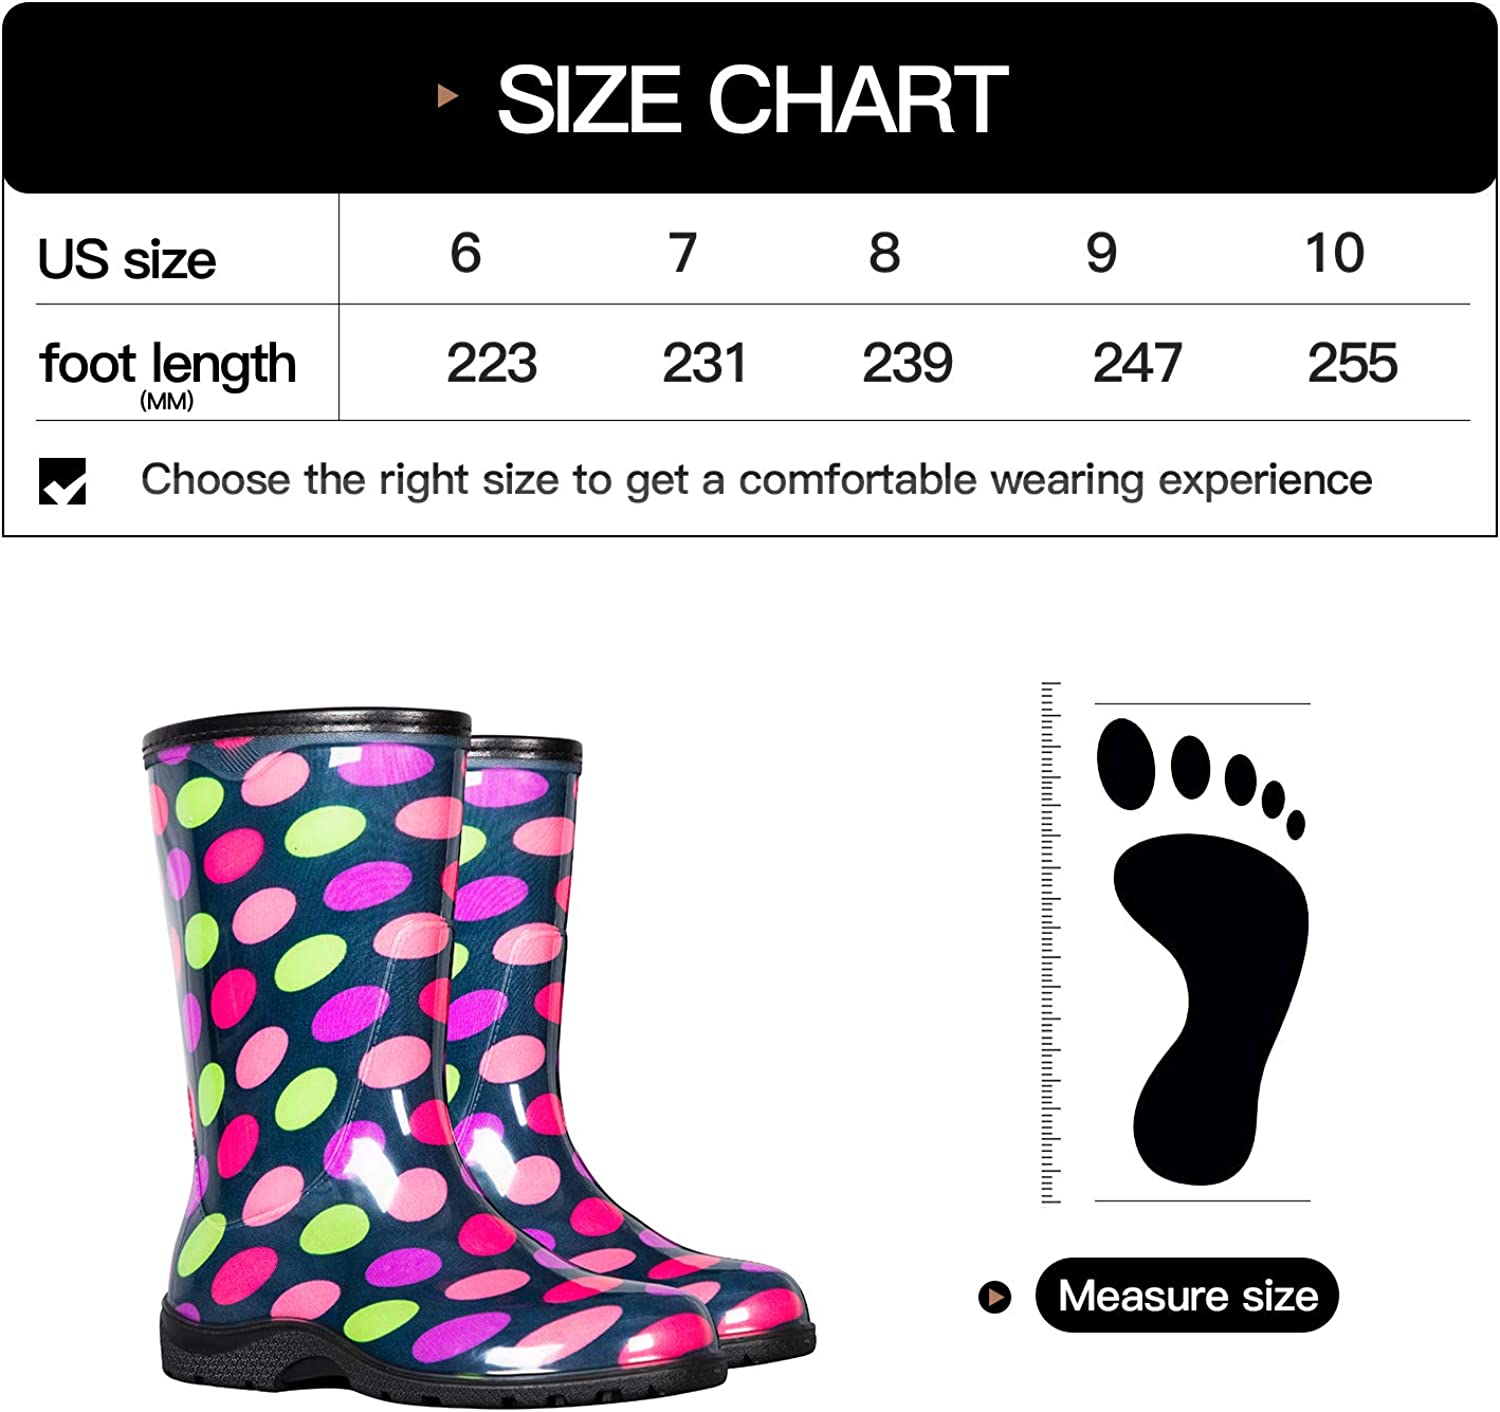 Colorful Polka Dot Waterproof Print Mid-Cut Rain Boots - MYSOFT